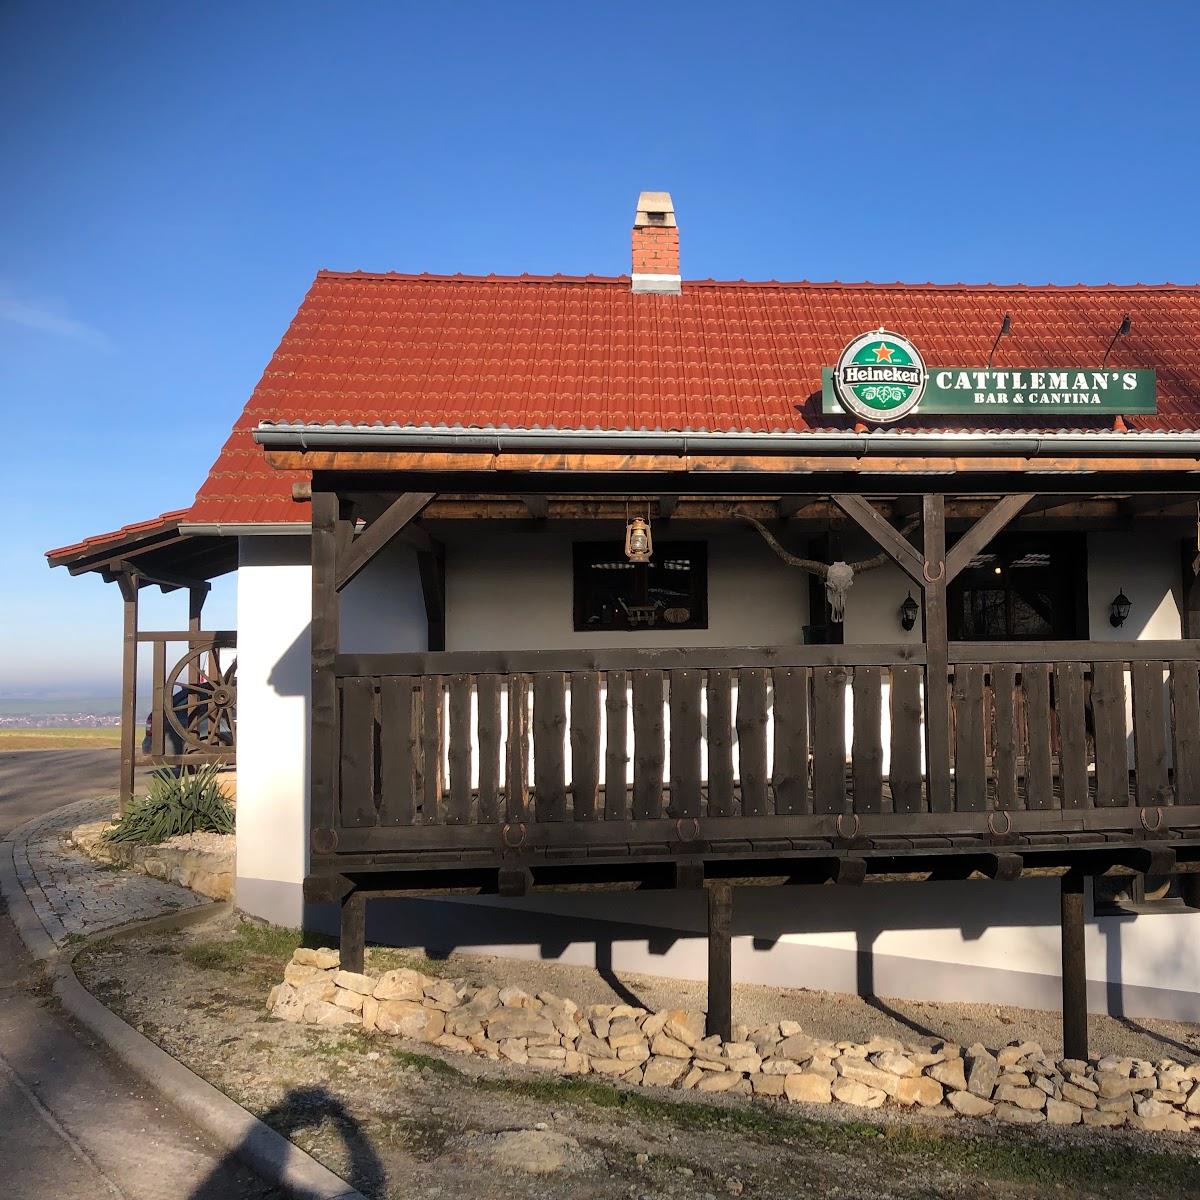 Restaurant "Cattleman